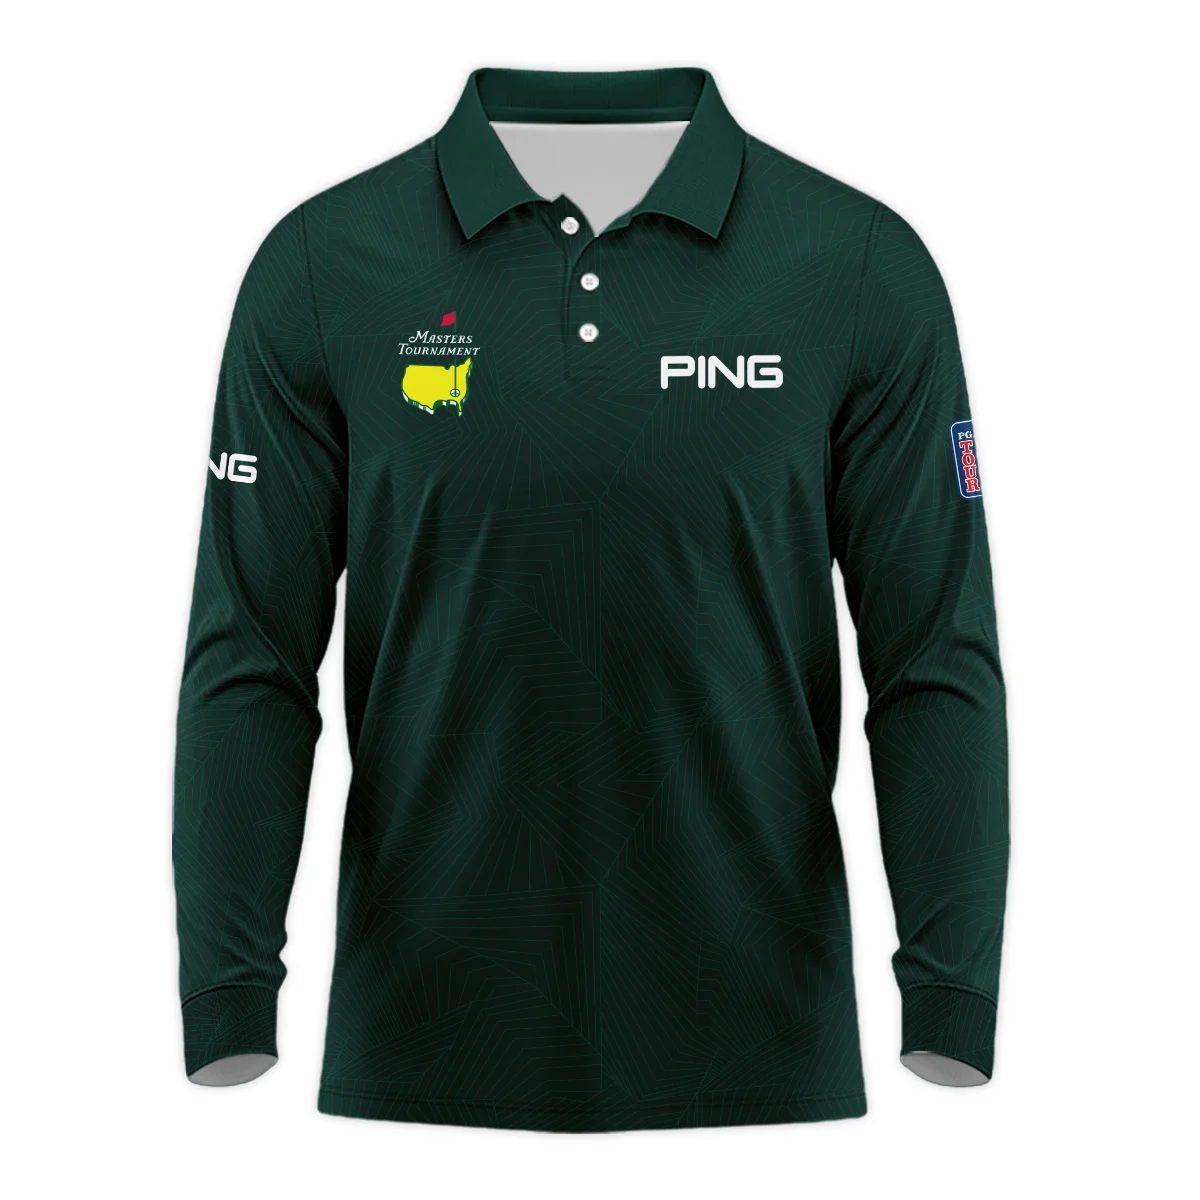 Masters Tournament Ping Pattern Sport Jersey Dark Green Sleeveless Jacket Style Classic Sleeveless Jacket